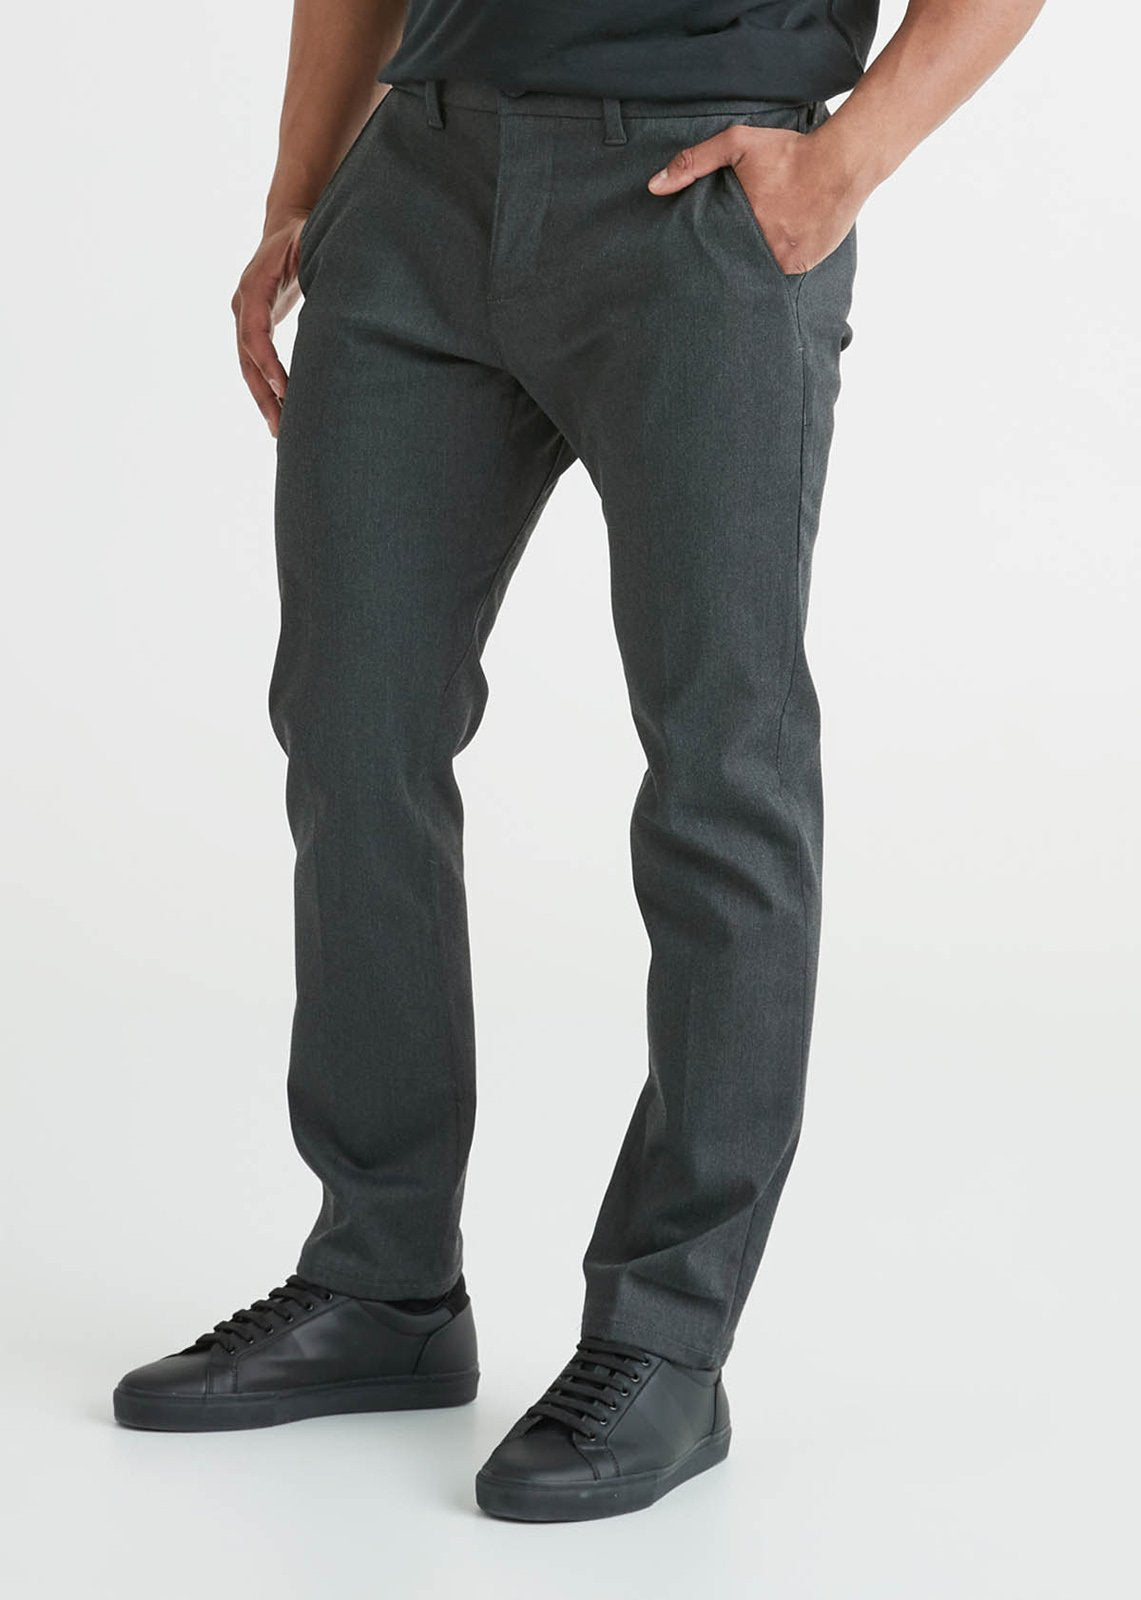 Comfortable Dress Stretch Pants Options for Men & Teens - Between Carpools